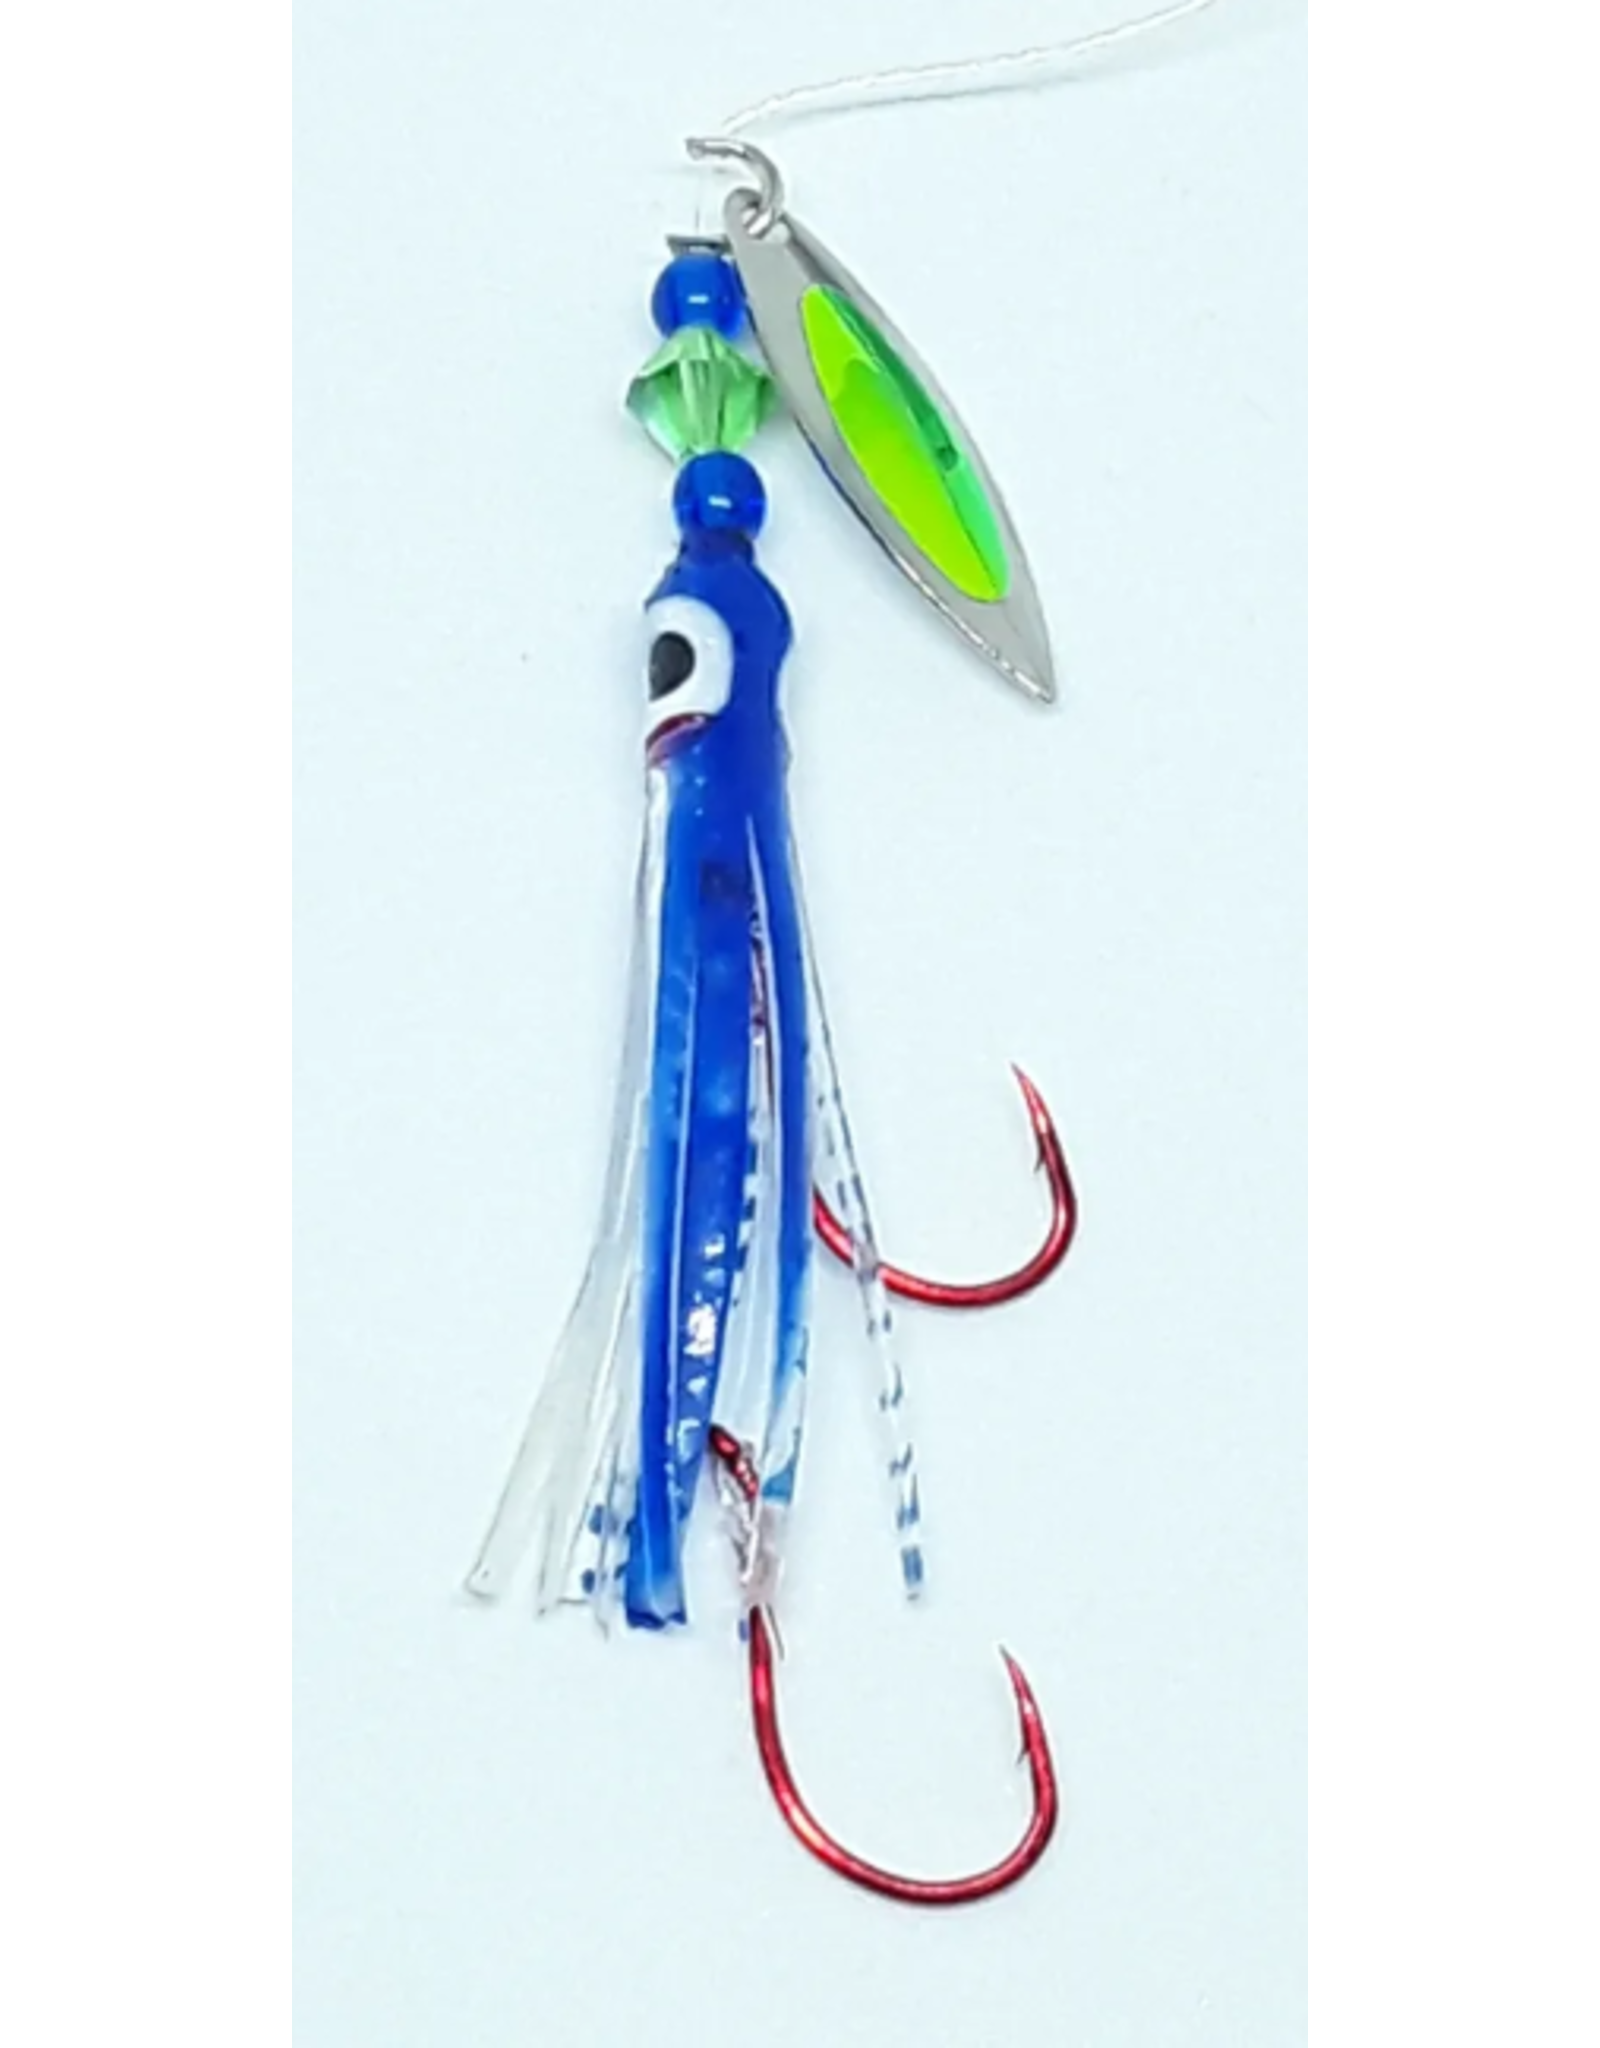 Kokabow Fishing Tackle - Squid Series - Deja Blue